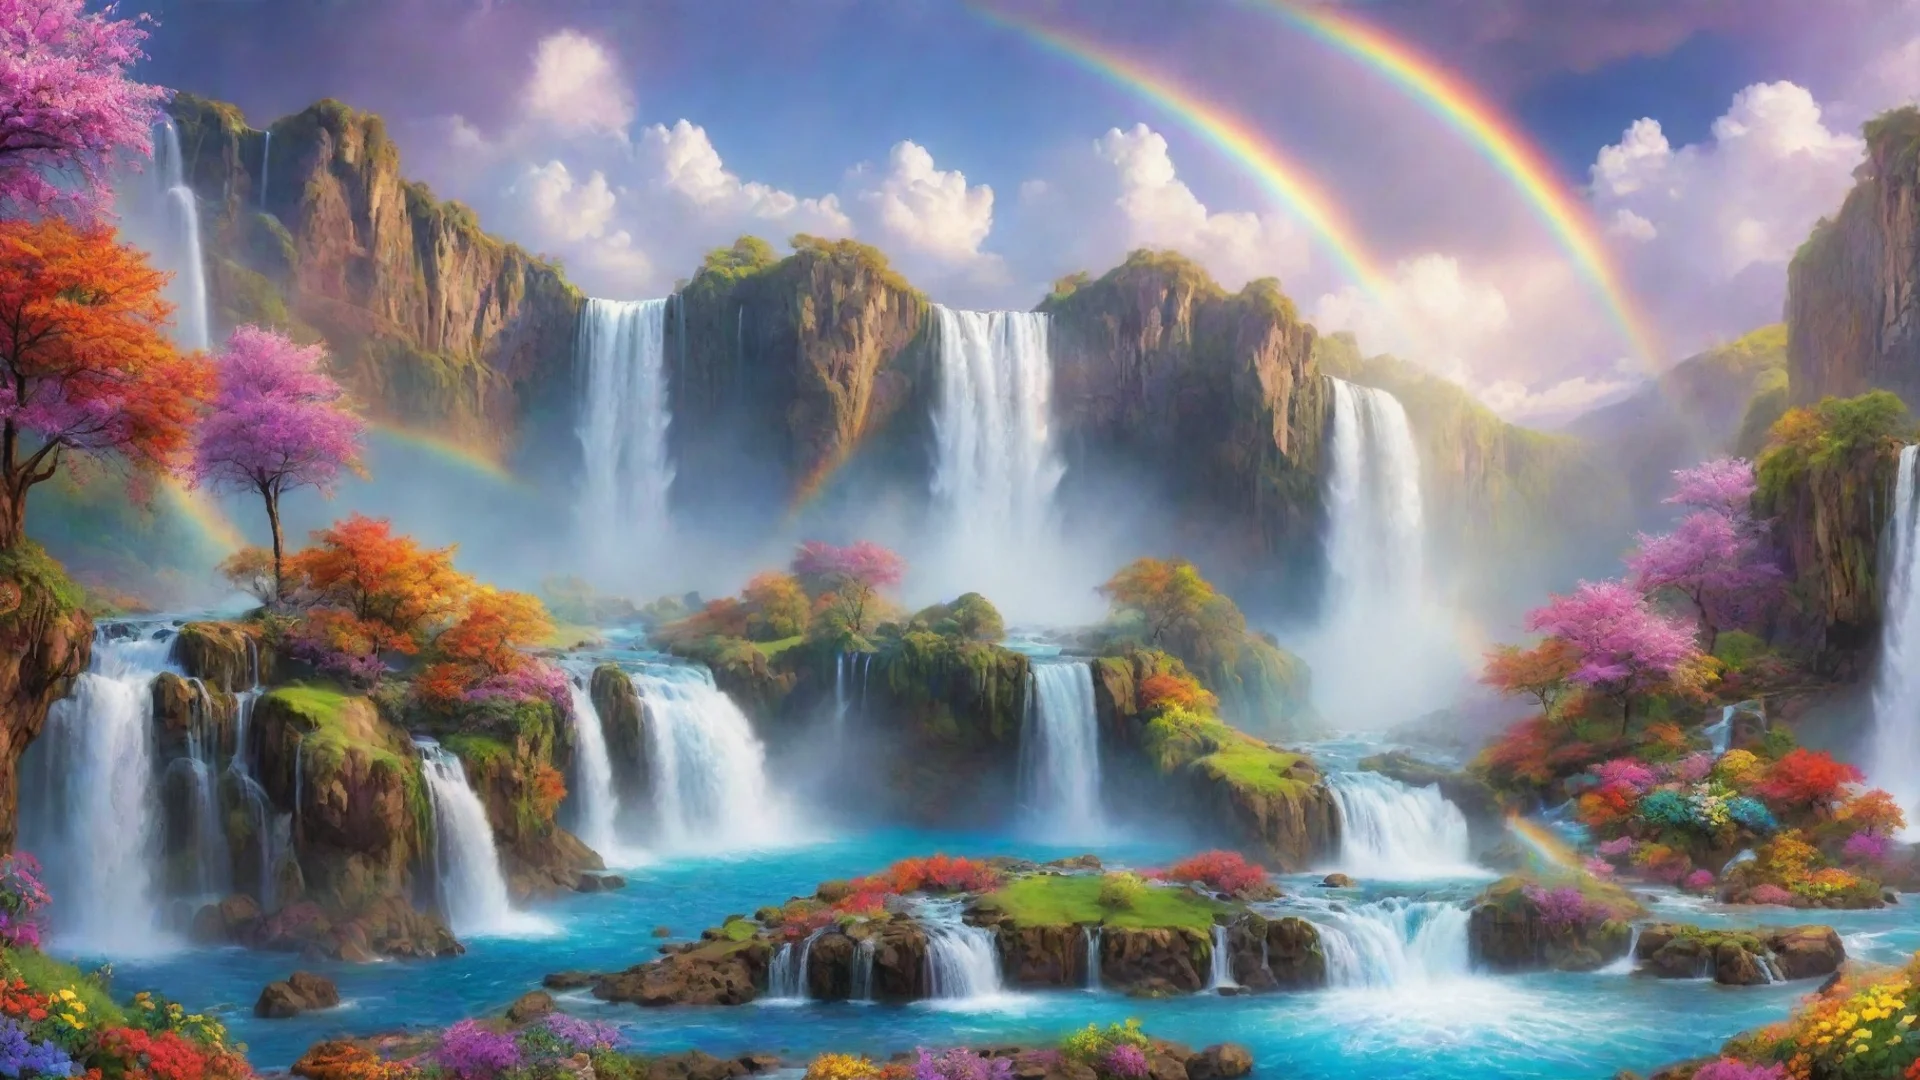 amazing dreamy colorful landscape alian world amazing beautiful utopian colors flowers waterfalls rainbows clouds awesome portrait 2 wide